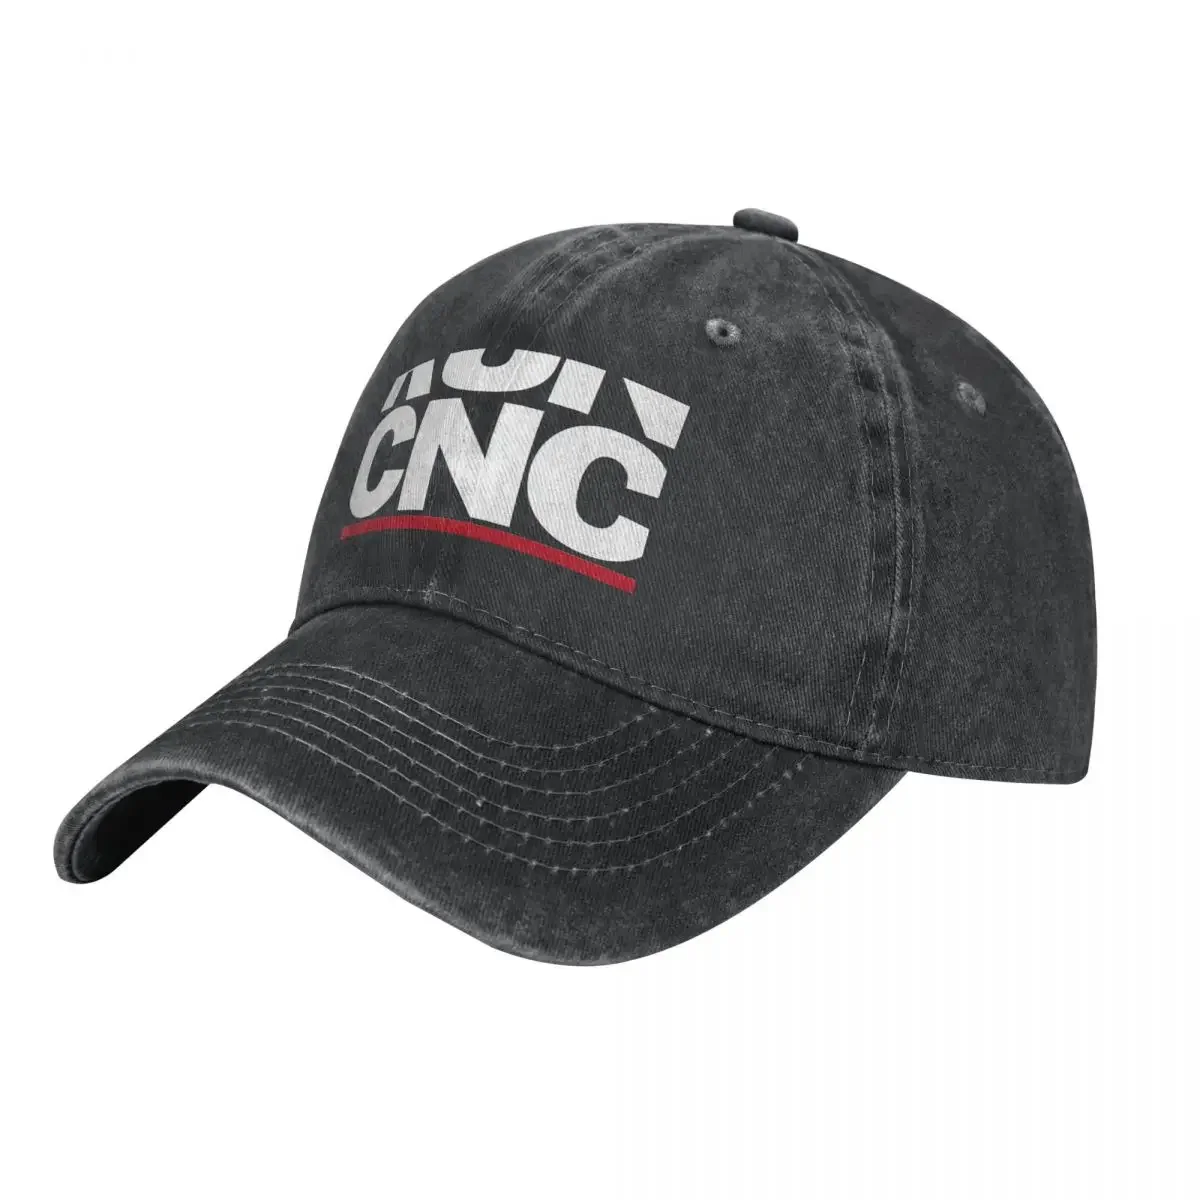 RUN CNC Cowboy Hat Trucker Hat Hat Man Luxury Mens Tennis Women's fashion soft el salvador heart flag hat gift dad hat trucker hat cowboy hat